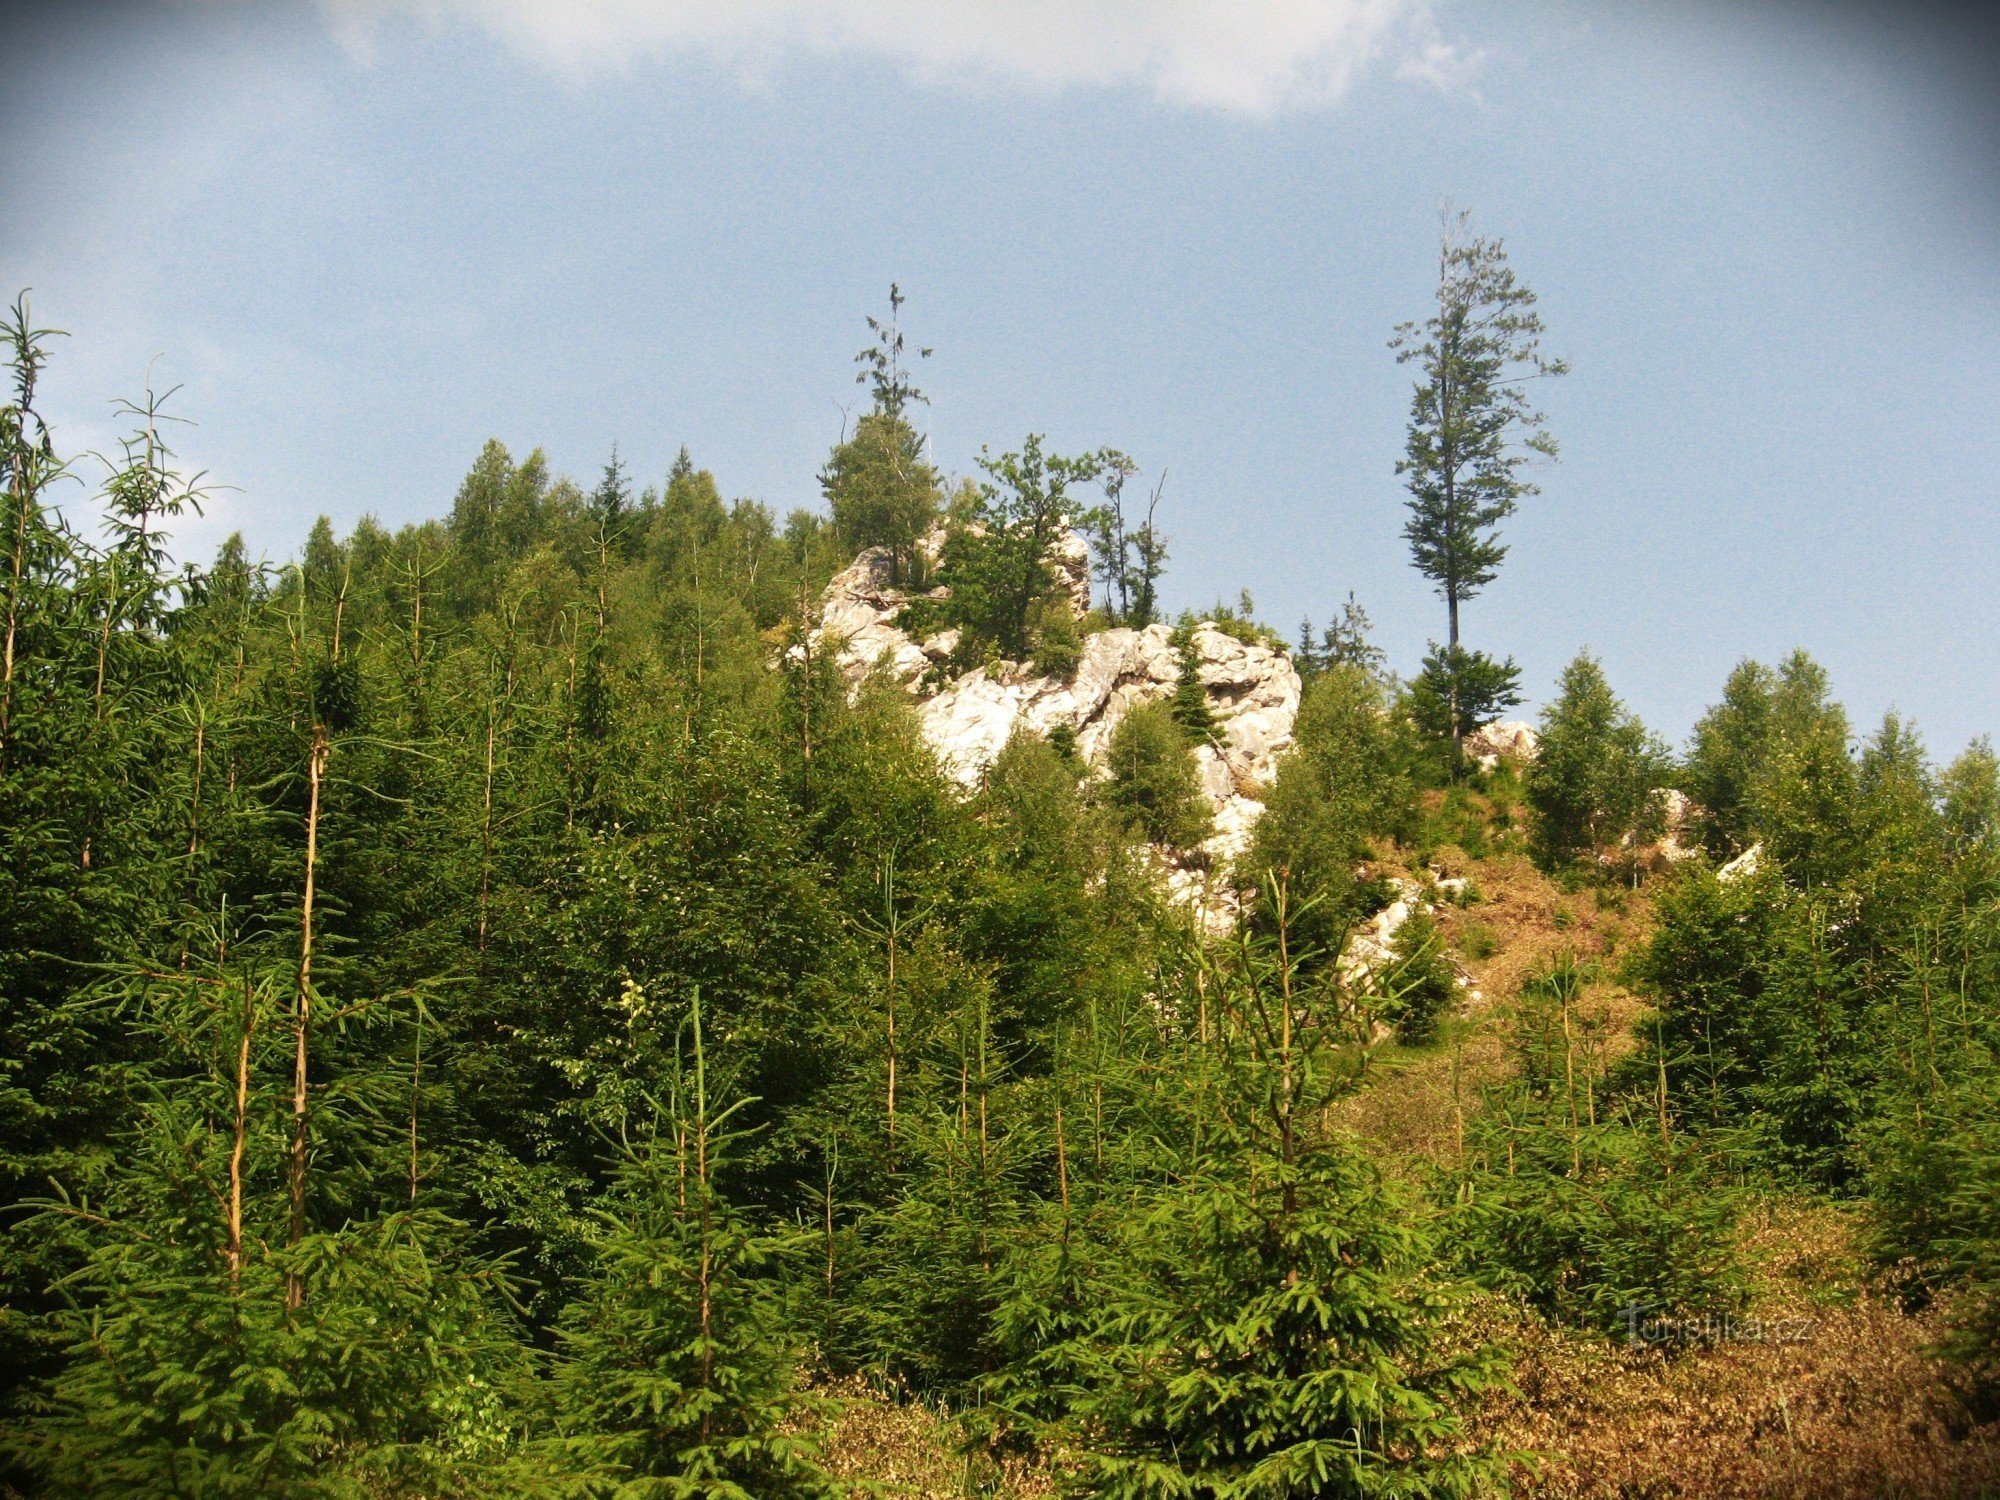 Skály pod Posedem (Біла скеля) - гори Єсеники